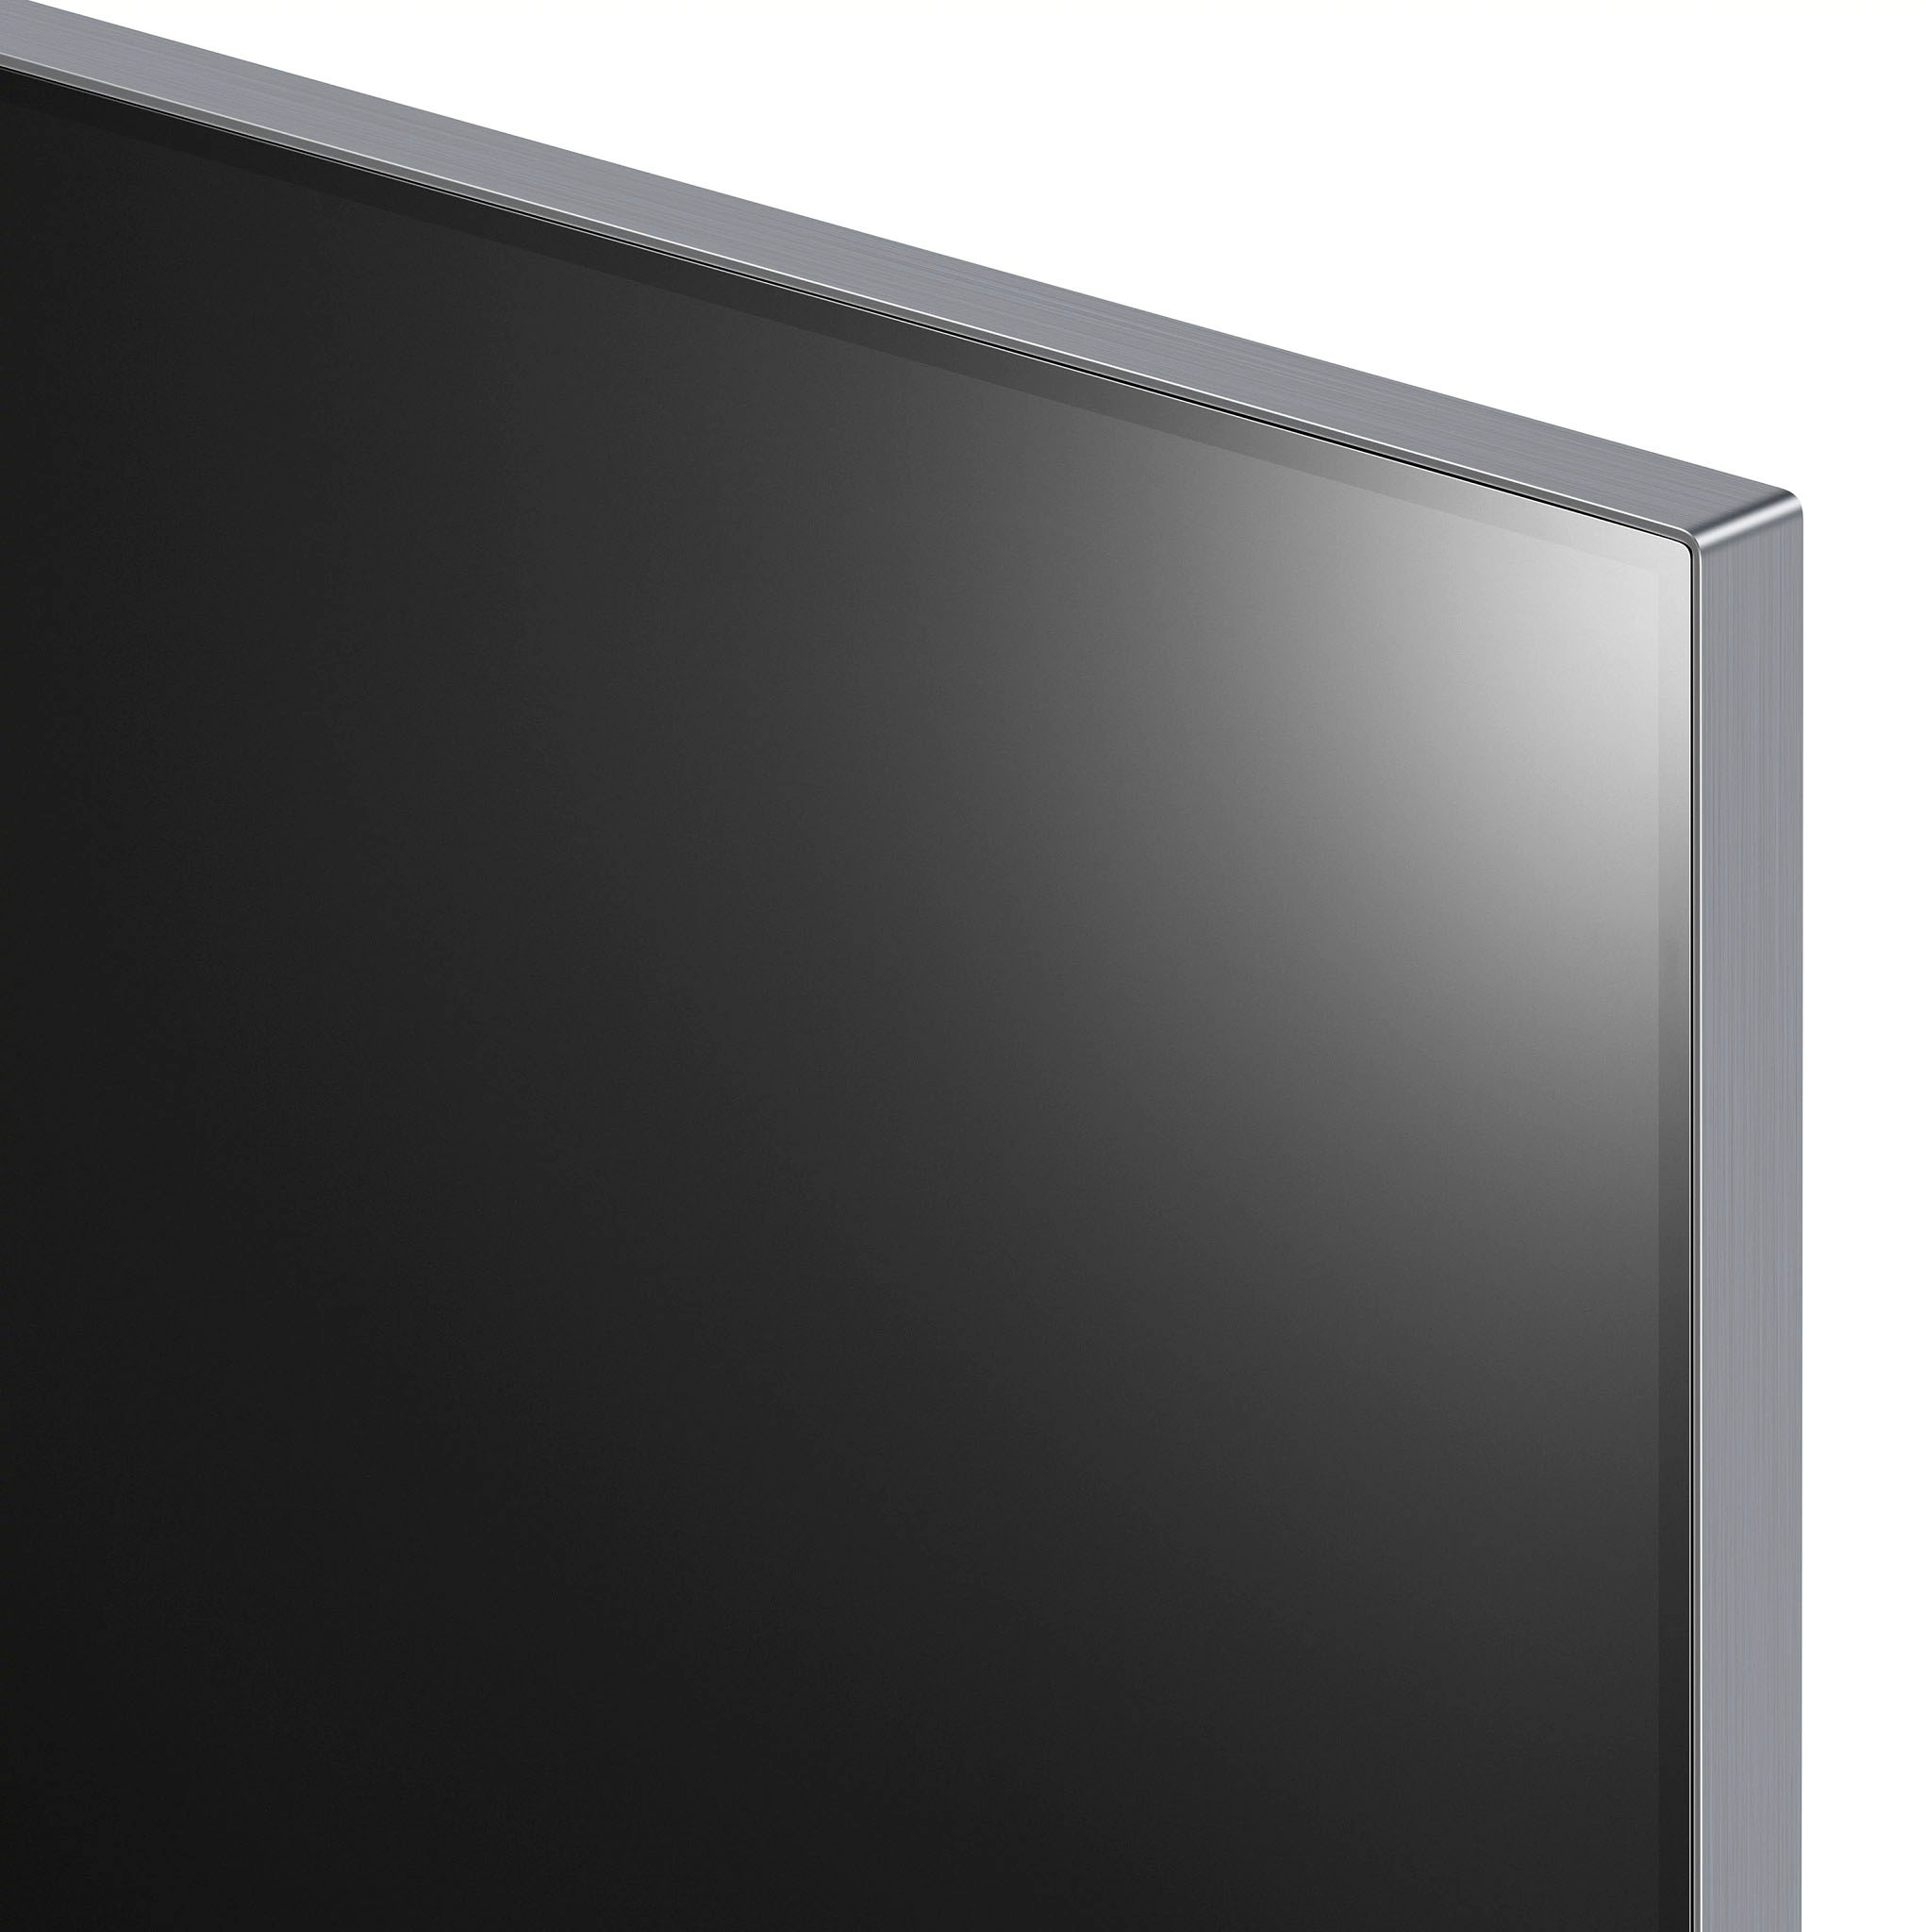 LG OLED G3 de 65 pulgadas por 1.775 euros: LG se apunta al Black Friday